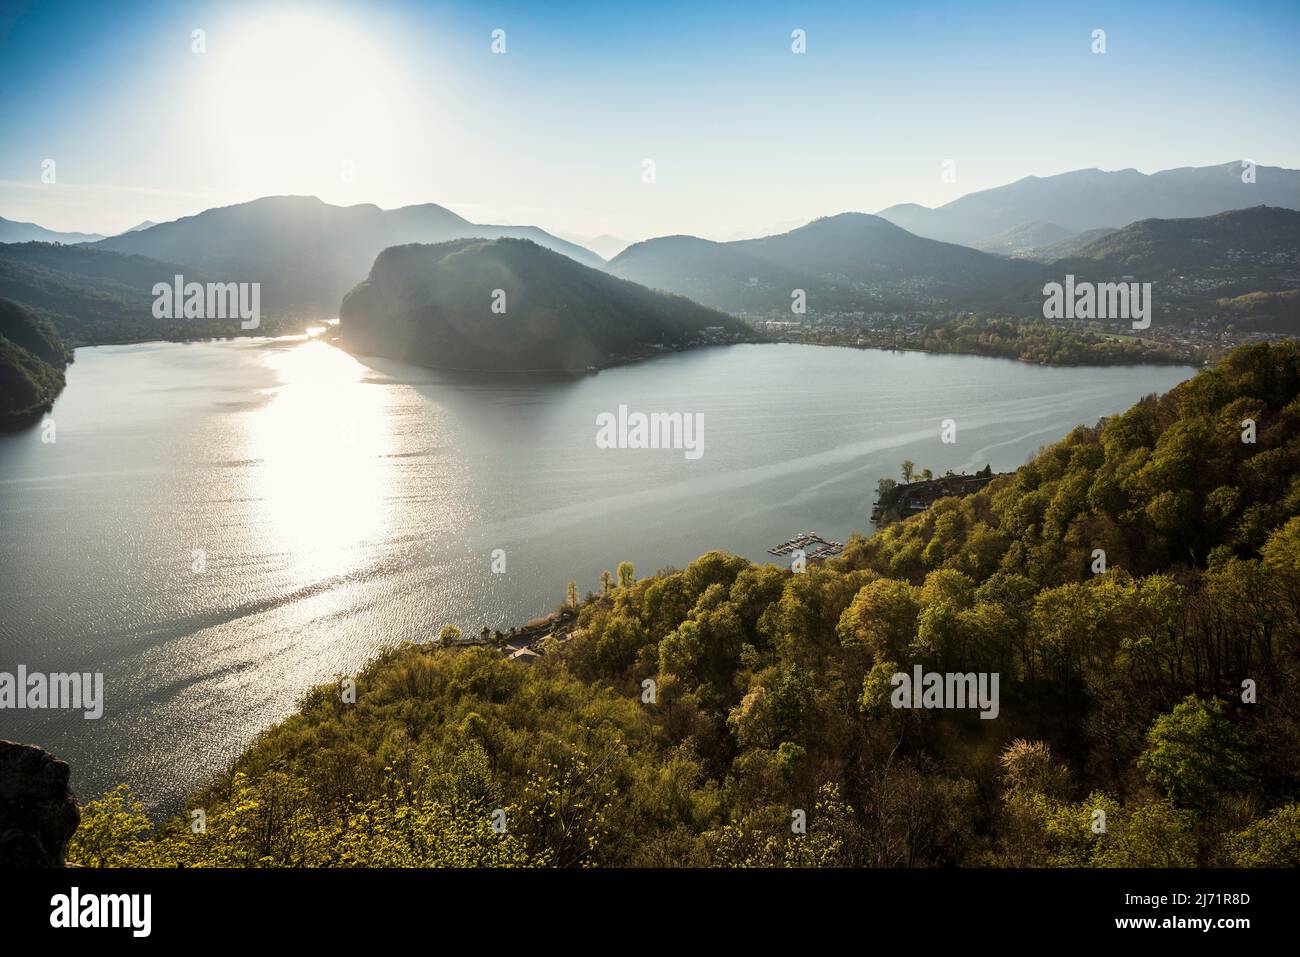 Viewpoint with view of lake and mountains, Sasso Delle Parole, near Lugano, Lake Lugano, Lago di Lugano, Ticino, Switzerland Stock Photo